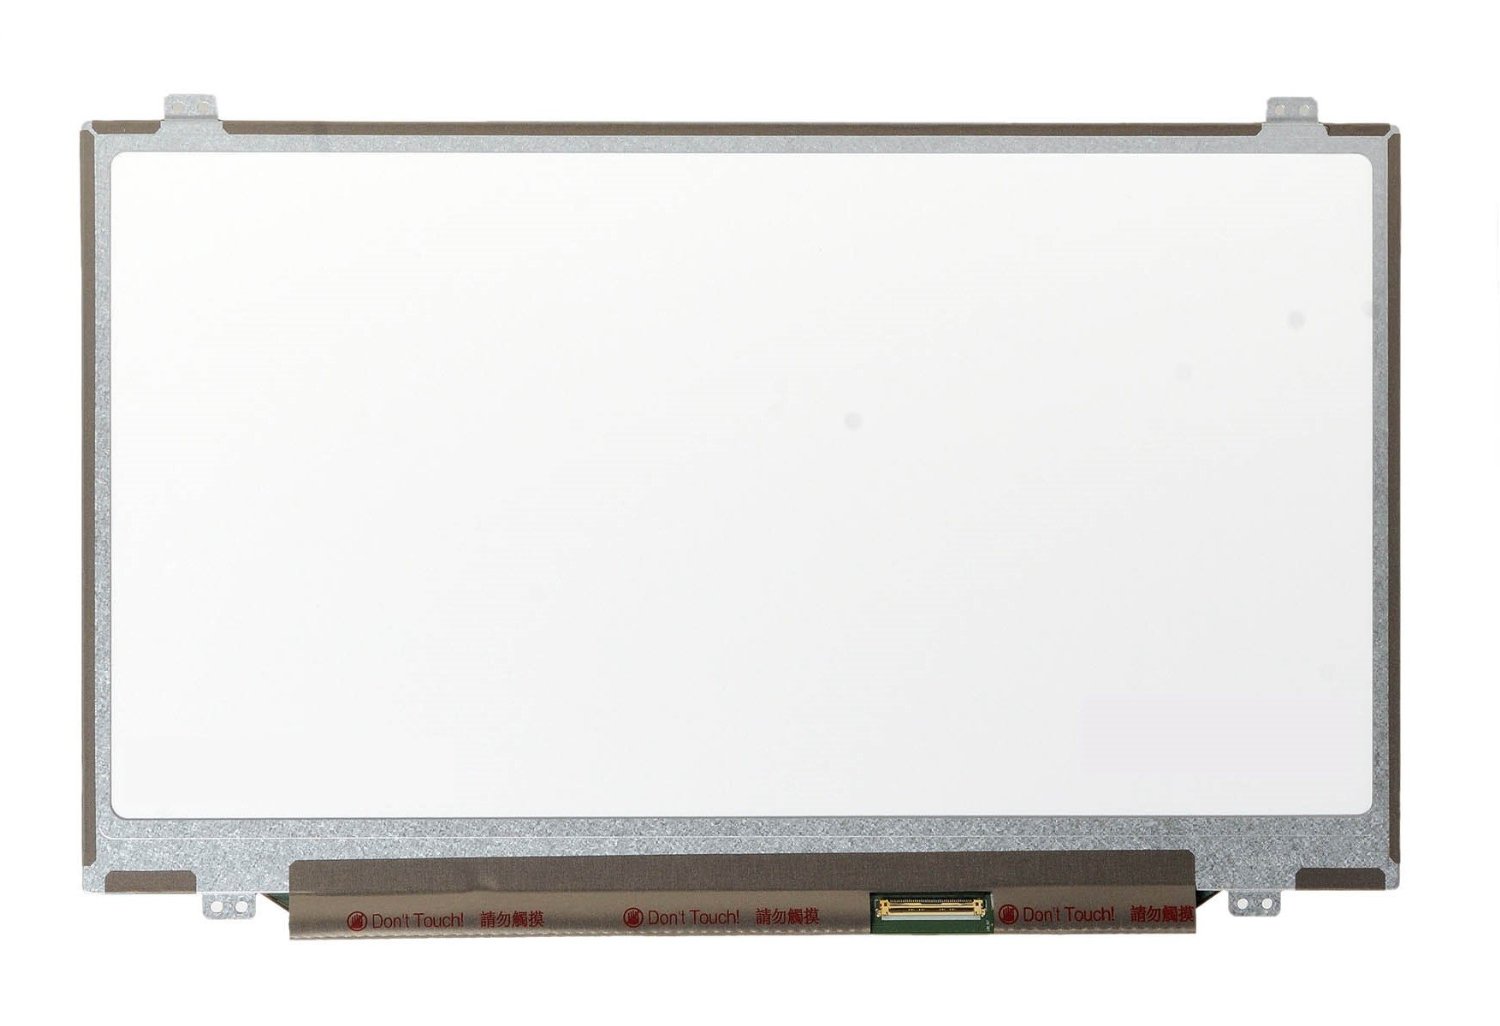 LENOVO 93p5693 PANTALLA LCD PARA LAPTOP 14.0 PULGADAS WXGA++ LED DIODE (B140RW02 V.1)